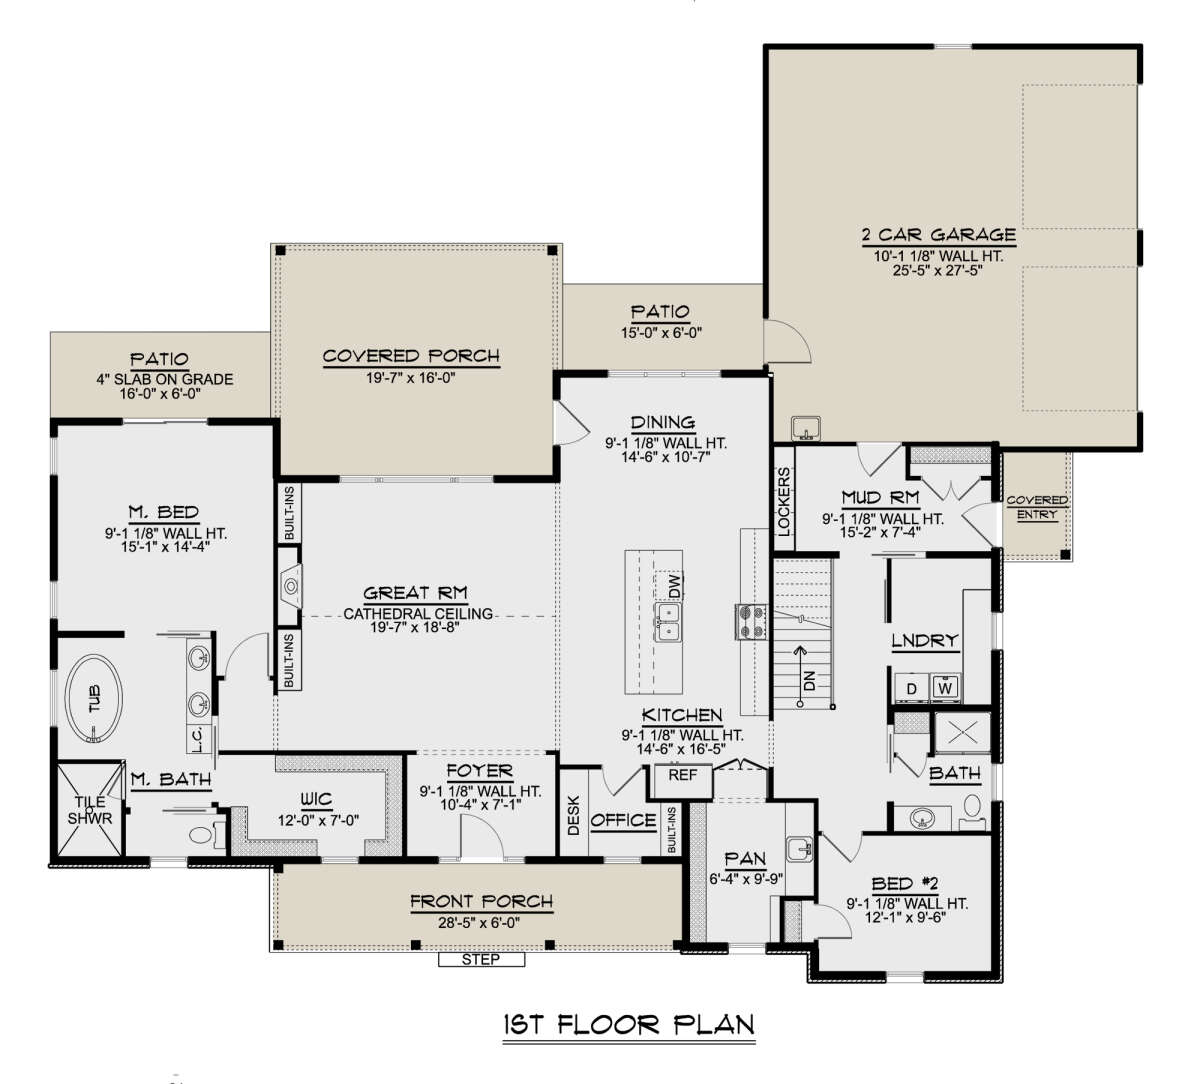 Main Floor for House Plan #5032-00138